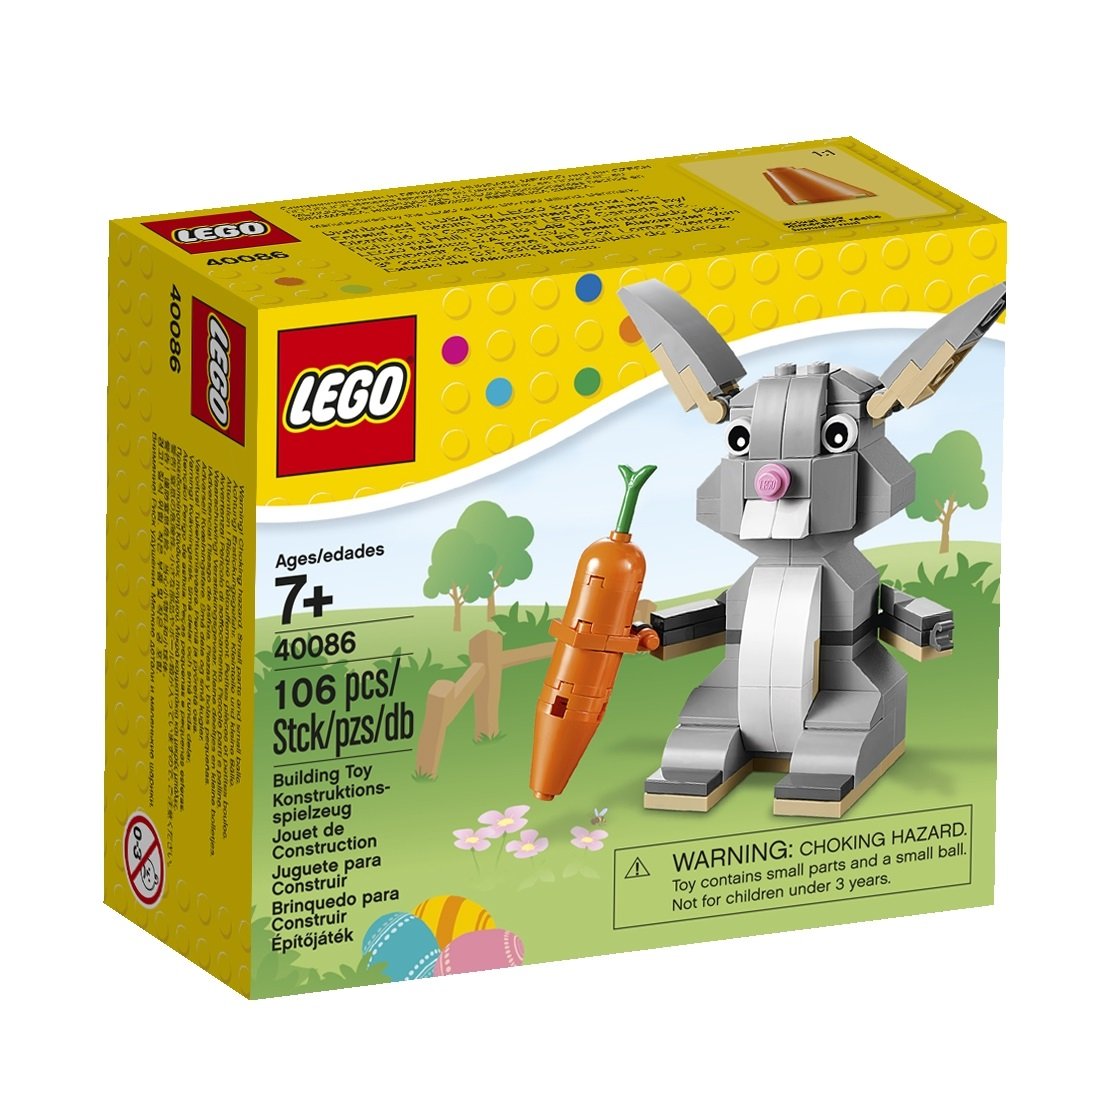 Lego Easter Bunny Toy Set